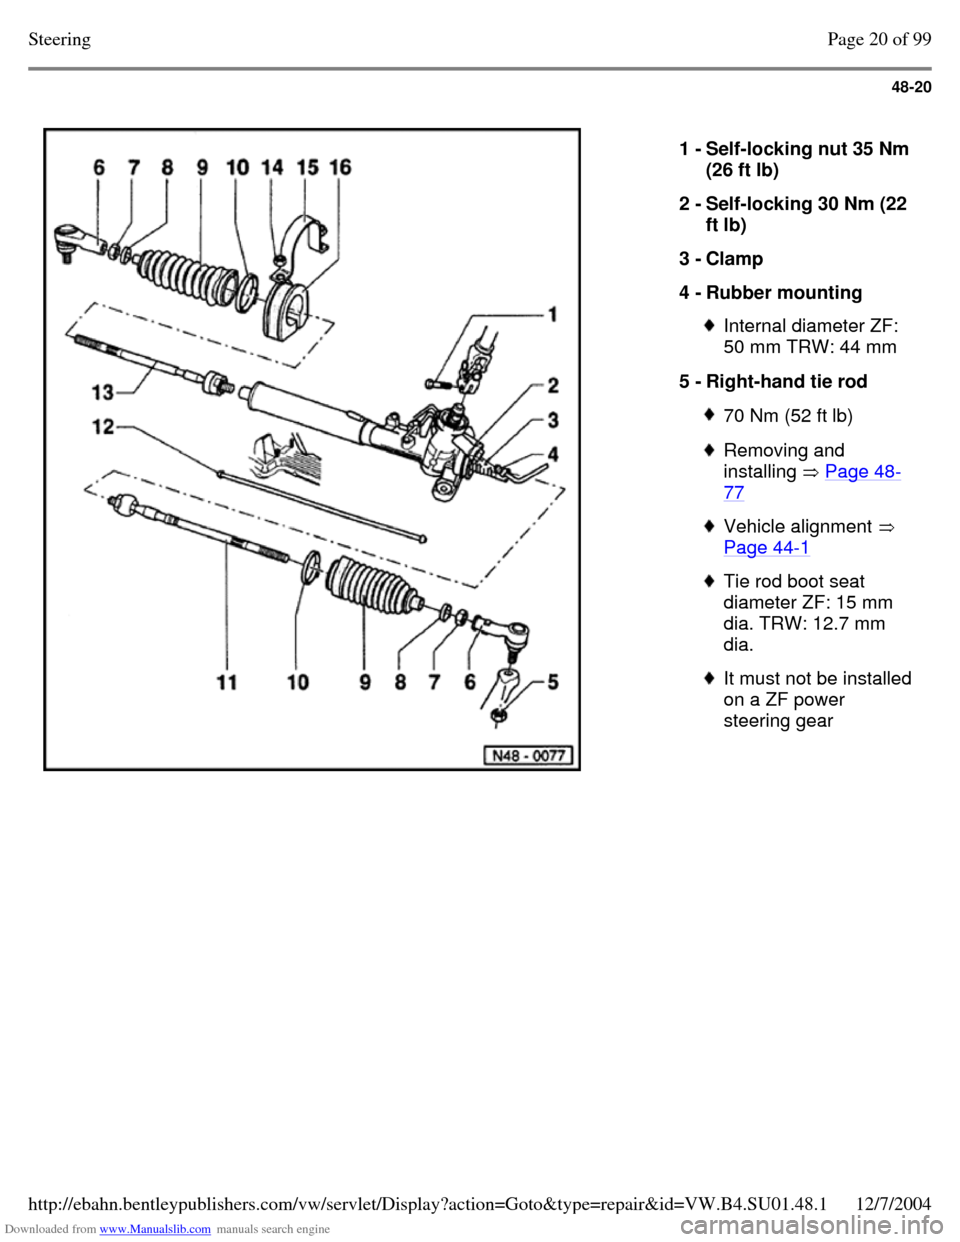 VOLKSWAGEN PASSAT 1997 B3, B4 / 3.G Service Workshop Manual Downloaded from www.Manualslib.com manuals search engine 48-20
   
1 - Self-locking nut 35 Nm 
(26 ft lb) 
2 - Self-locking 30 Nm (22 
ft lb) 
3 - Clamp 
4 - Rubber mounting  Internal diameter ZF: 
50